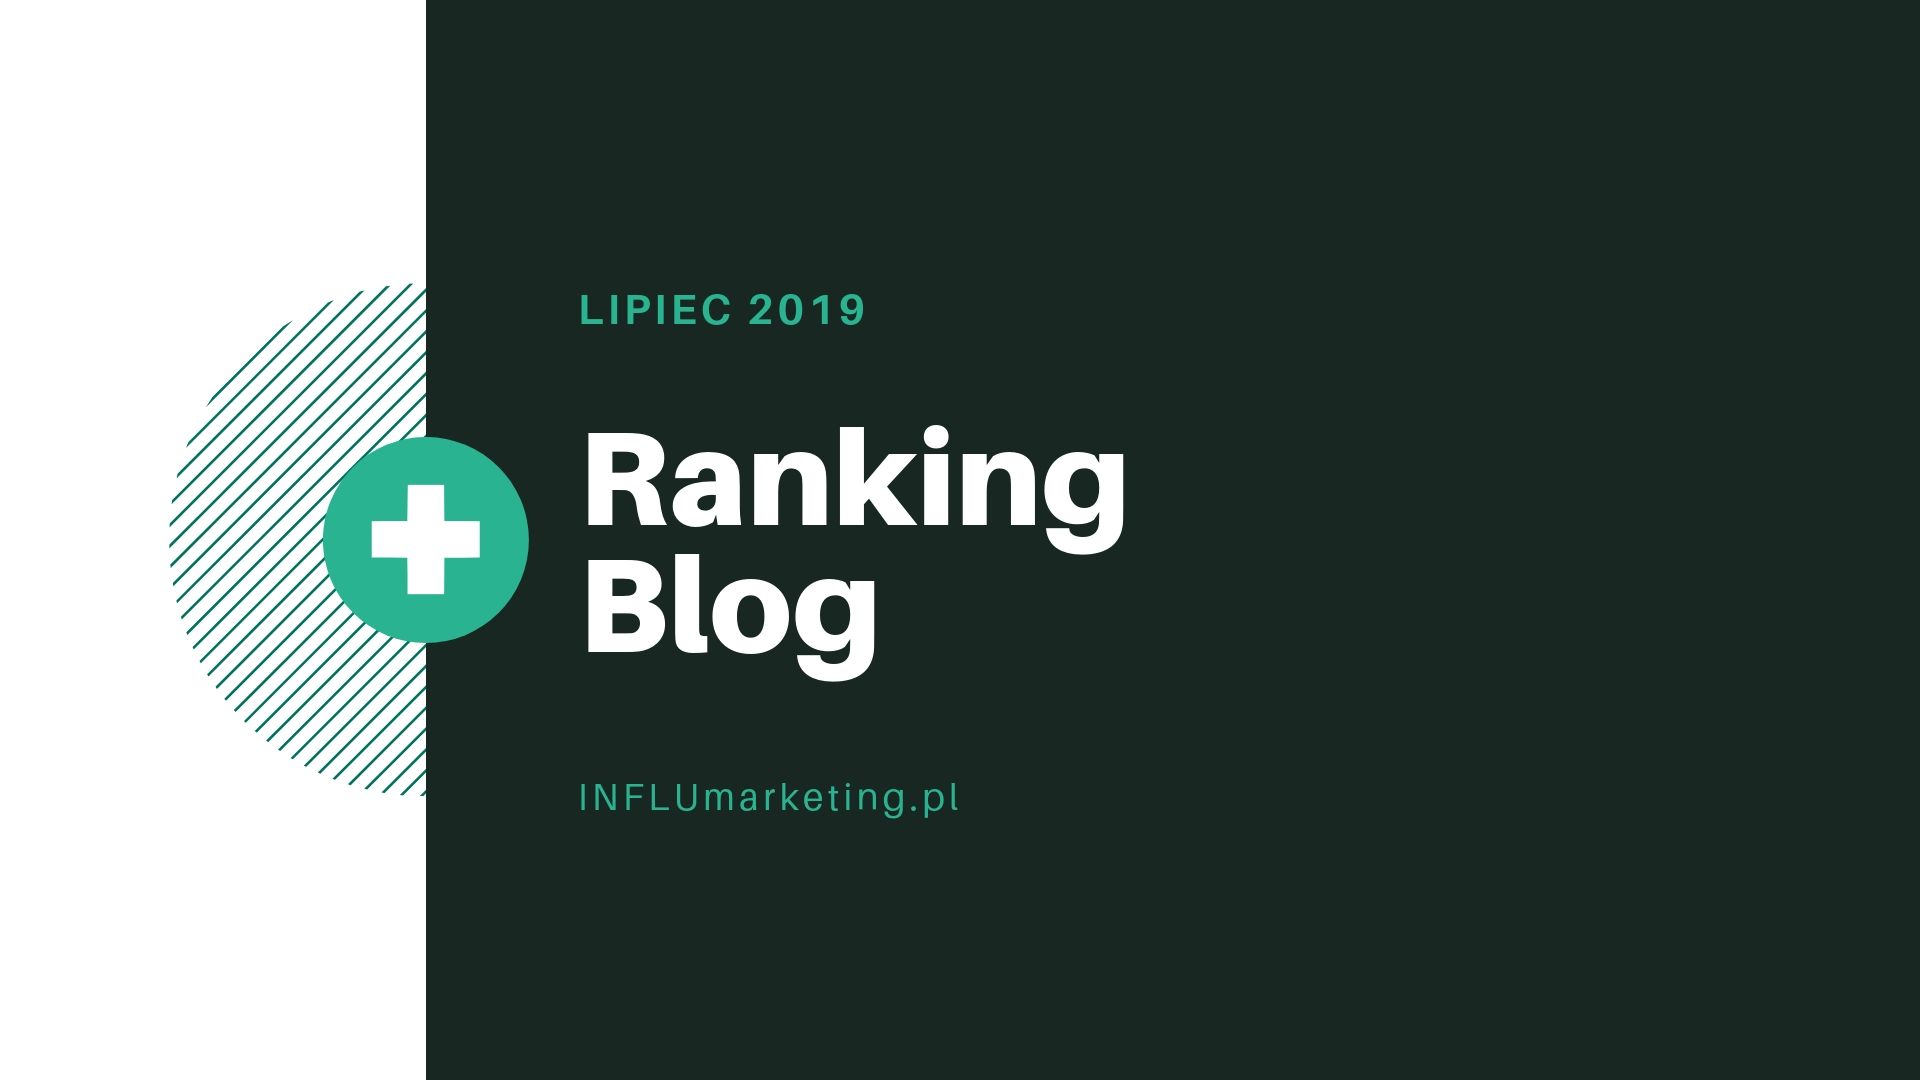 Ranking Blog Polska - Lipiec 2019